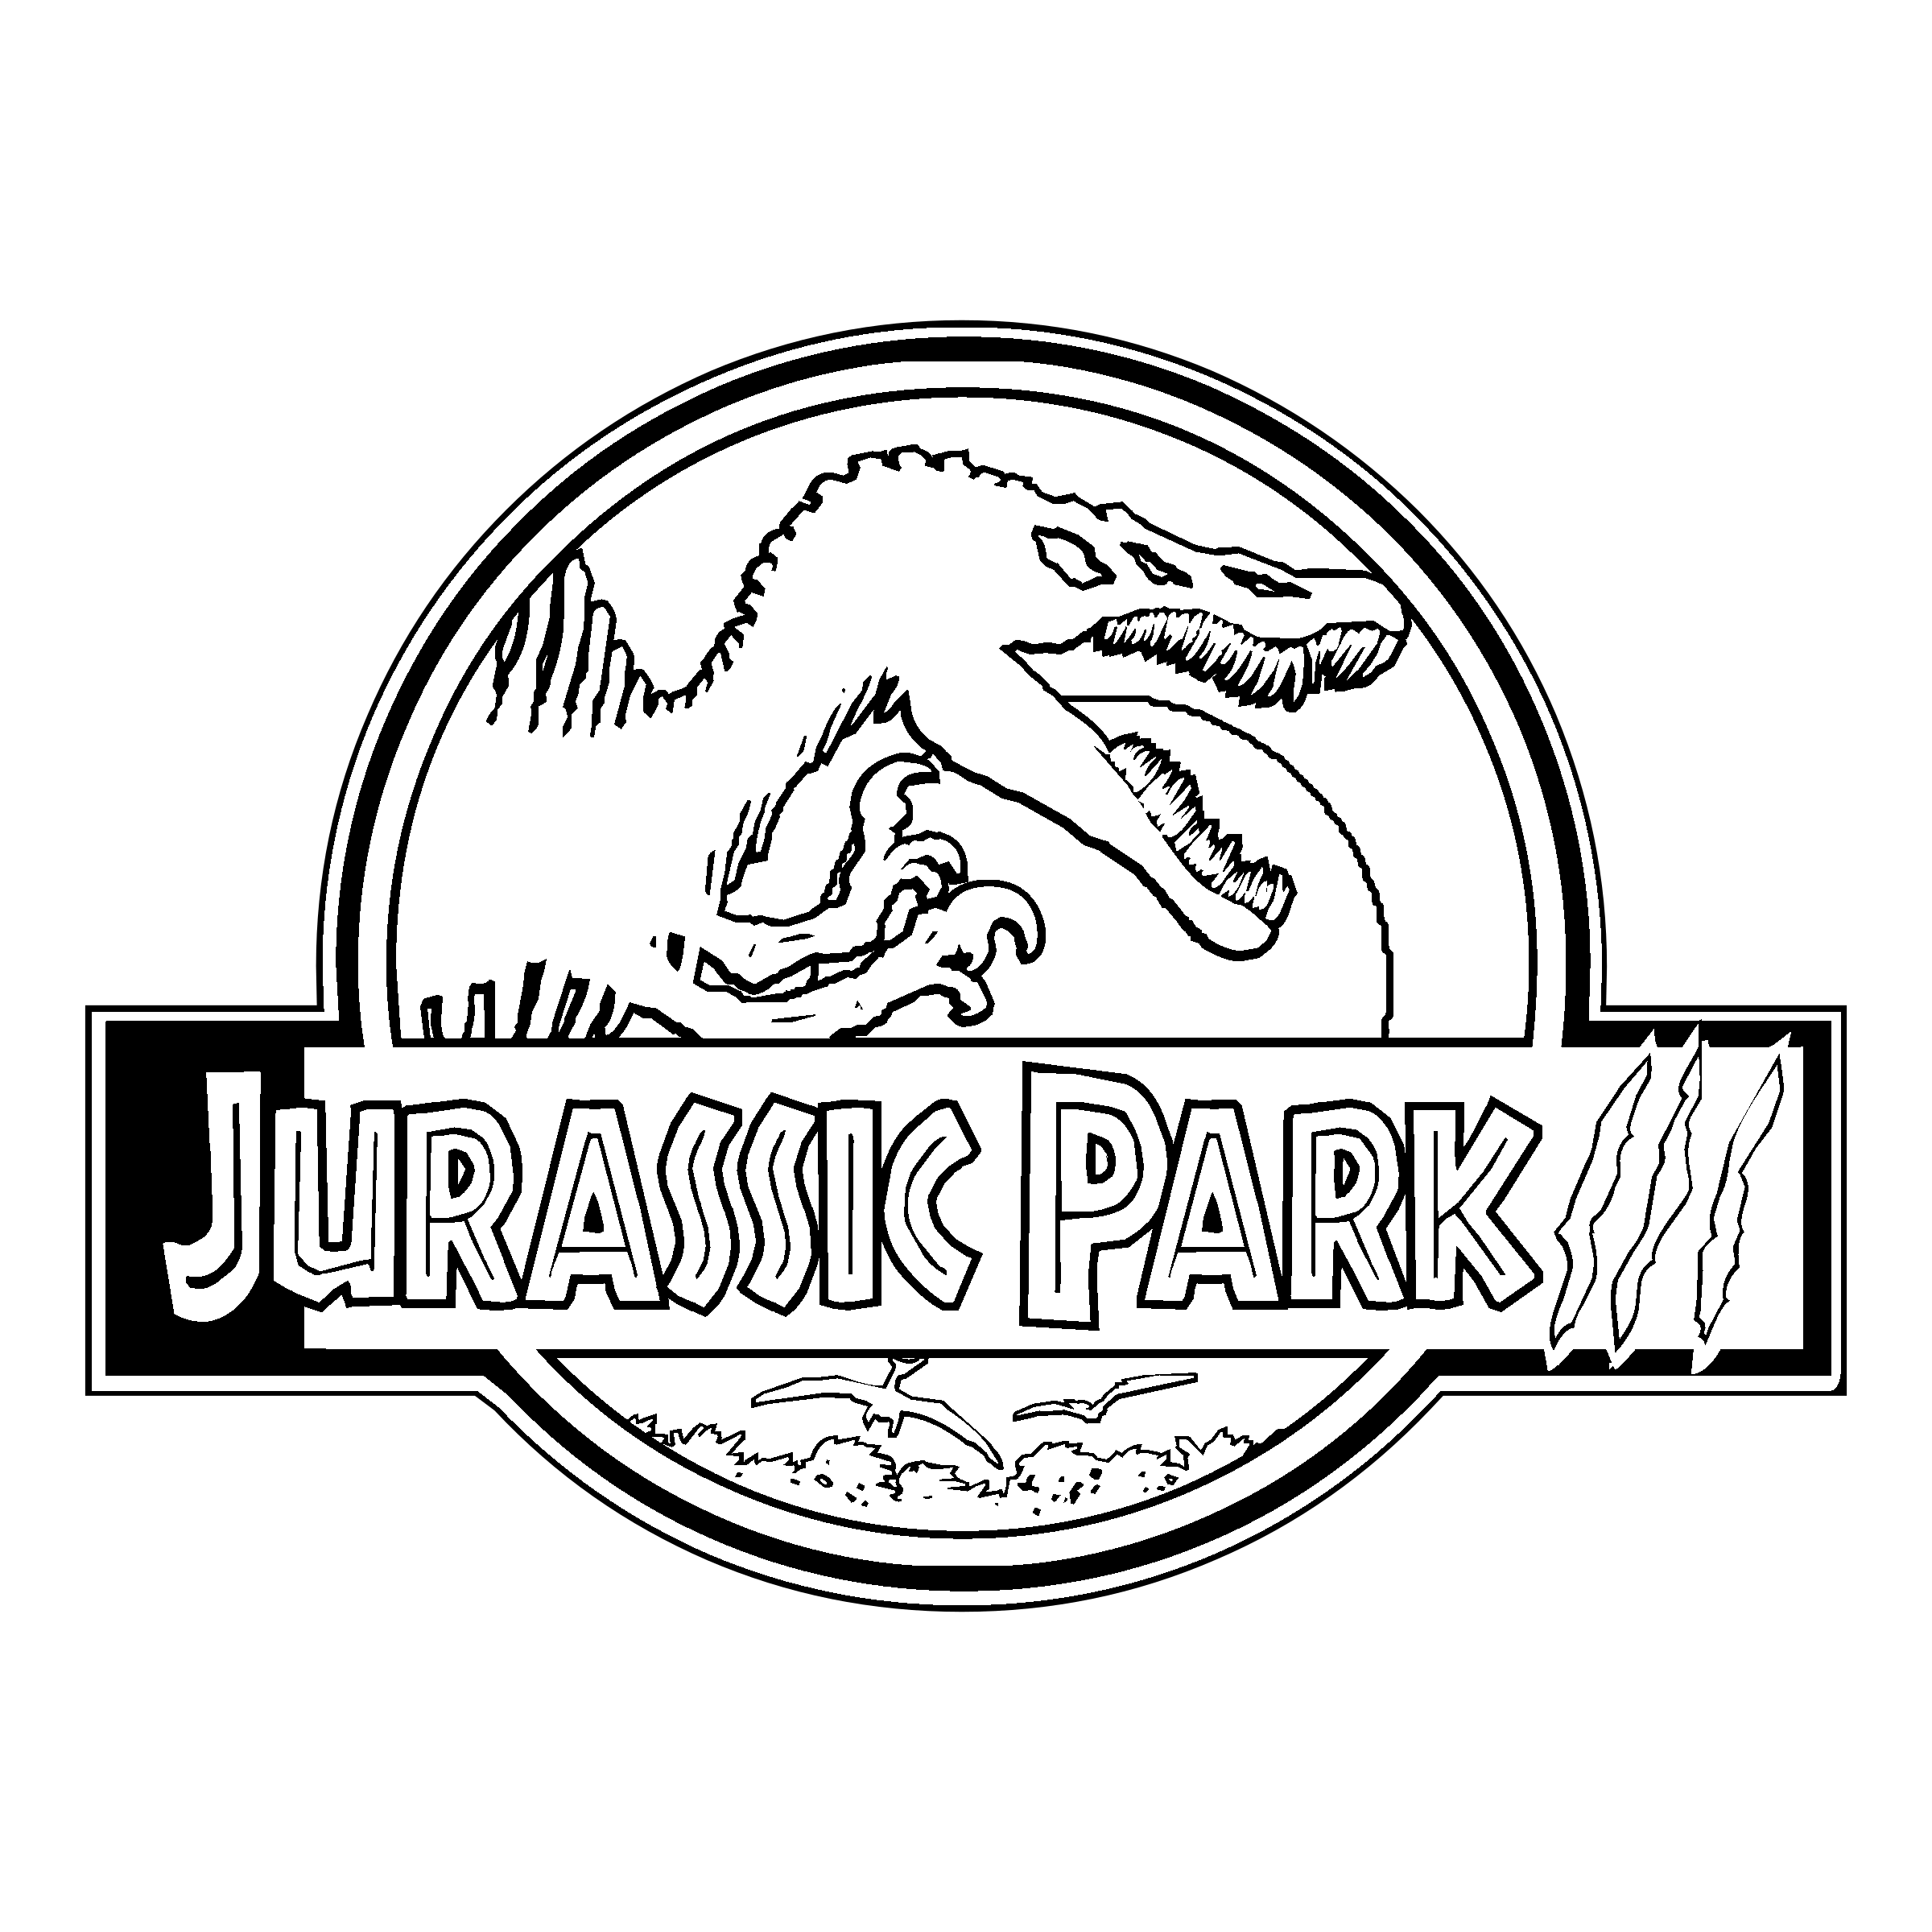 Jurassic Park Black and White Logo - Jurassic Park III Logo PNG Transparent & SVG Vector - Freebie Supply